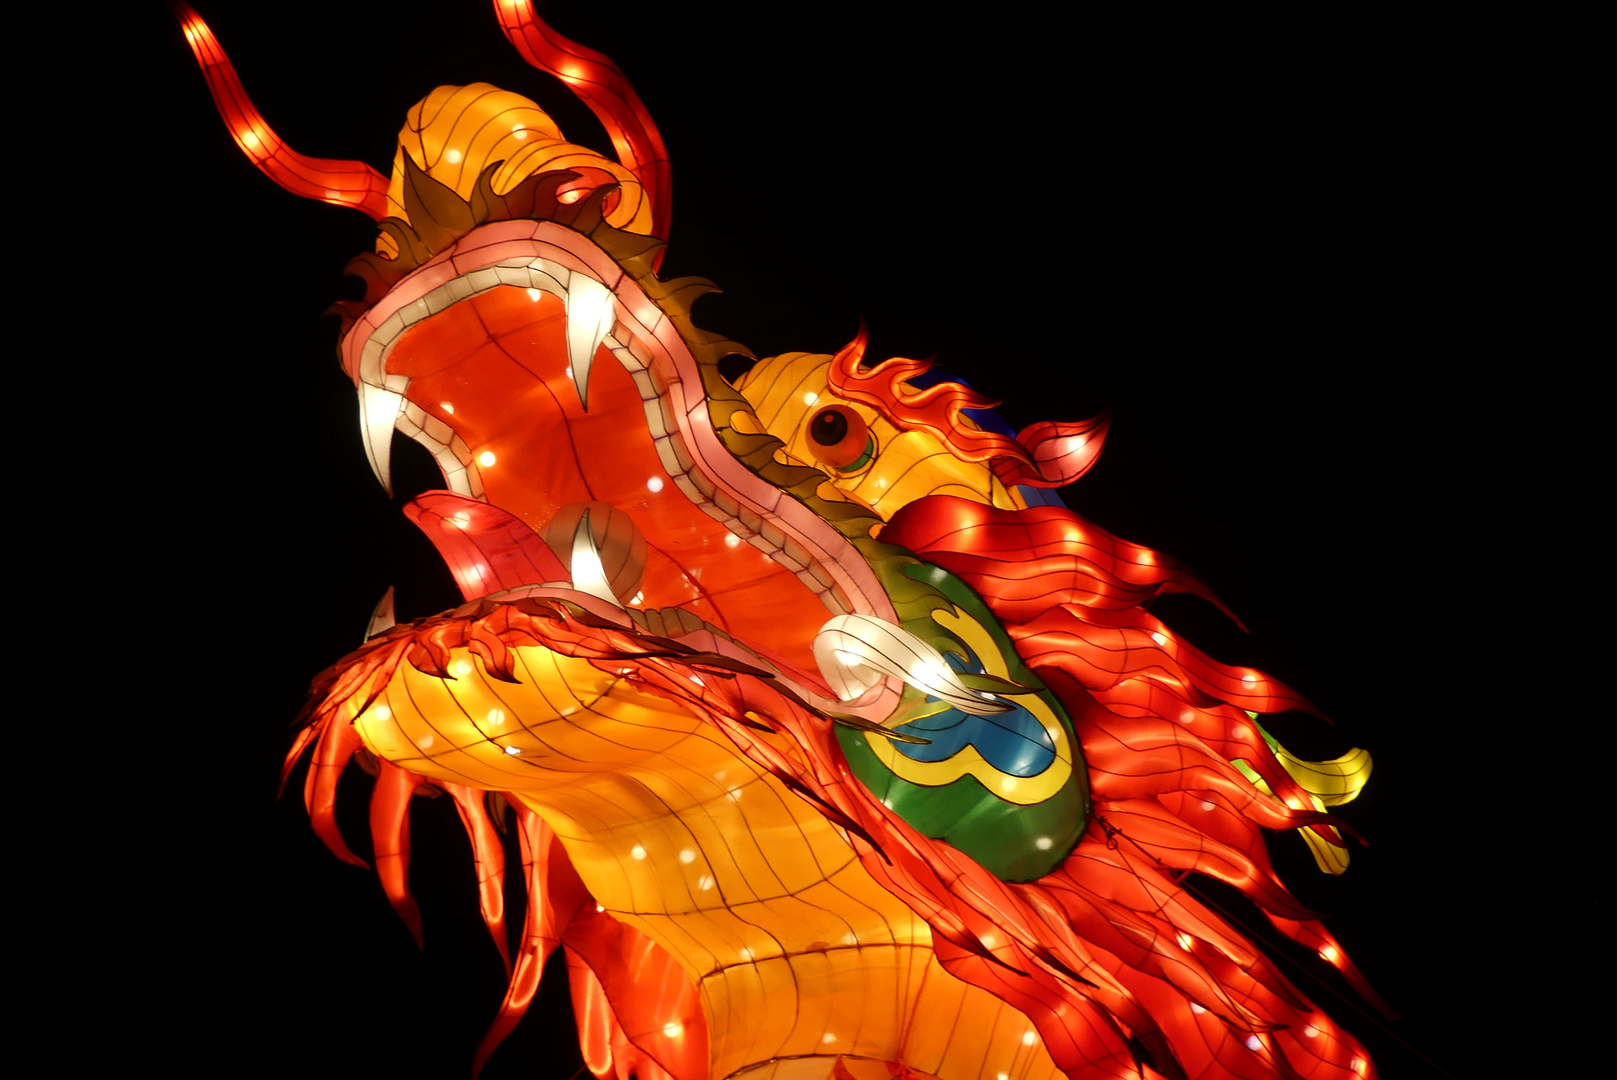 China Light Festival